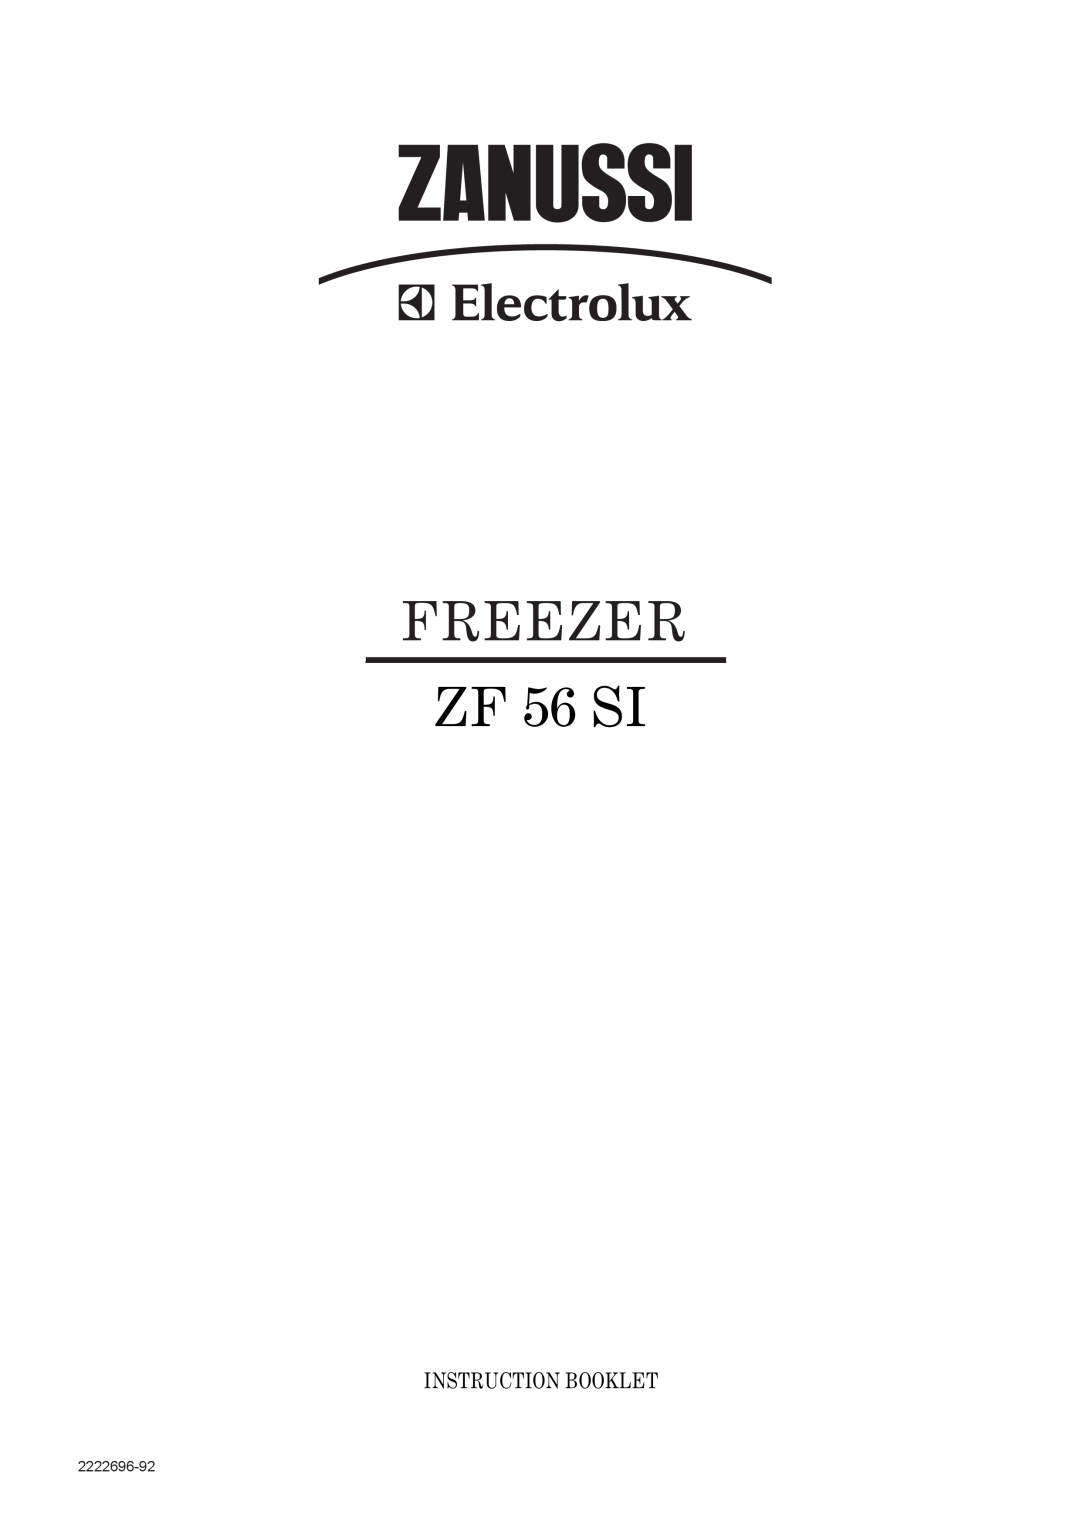 Zanussi manual FREEZER ZF 56 SI, Instruction Booklet, 2222696-92 